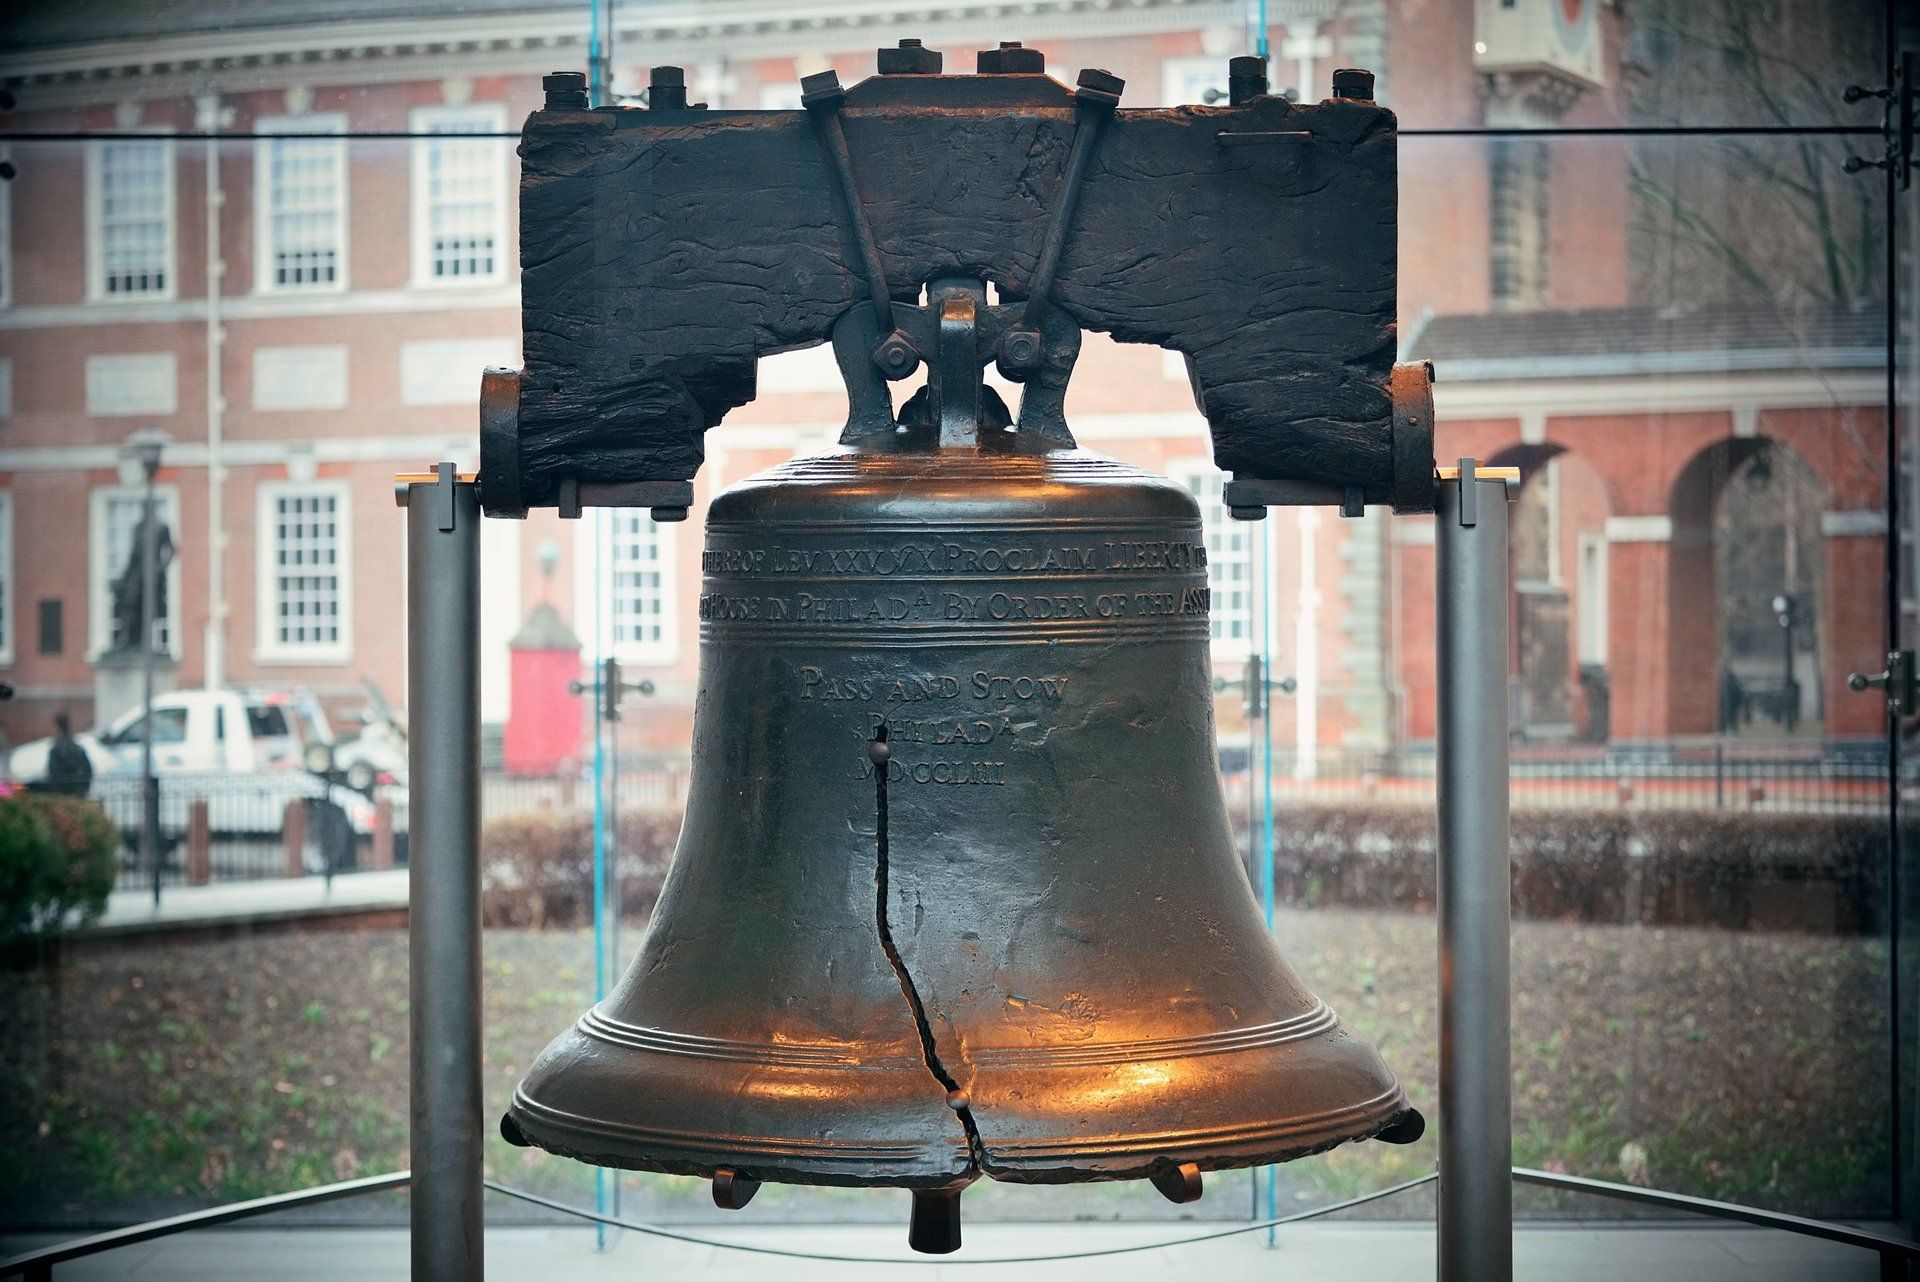 Liberty Bell - Philadelphia